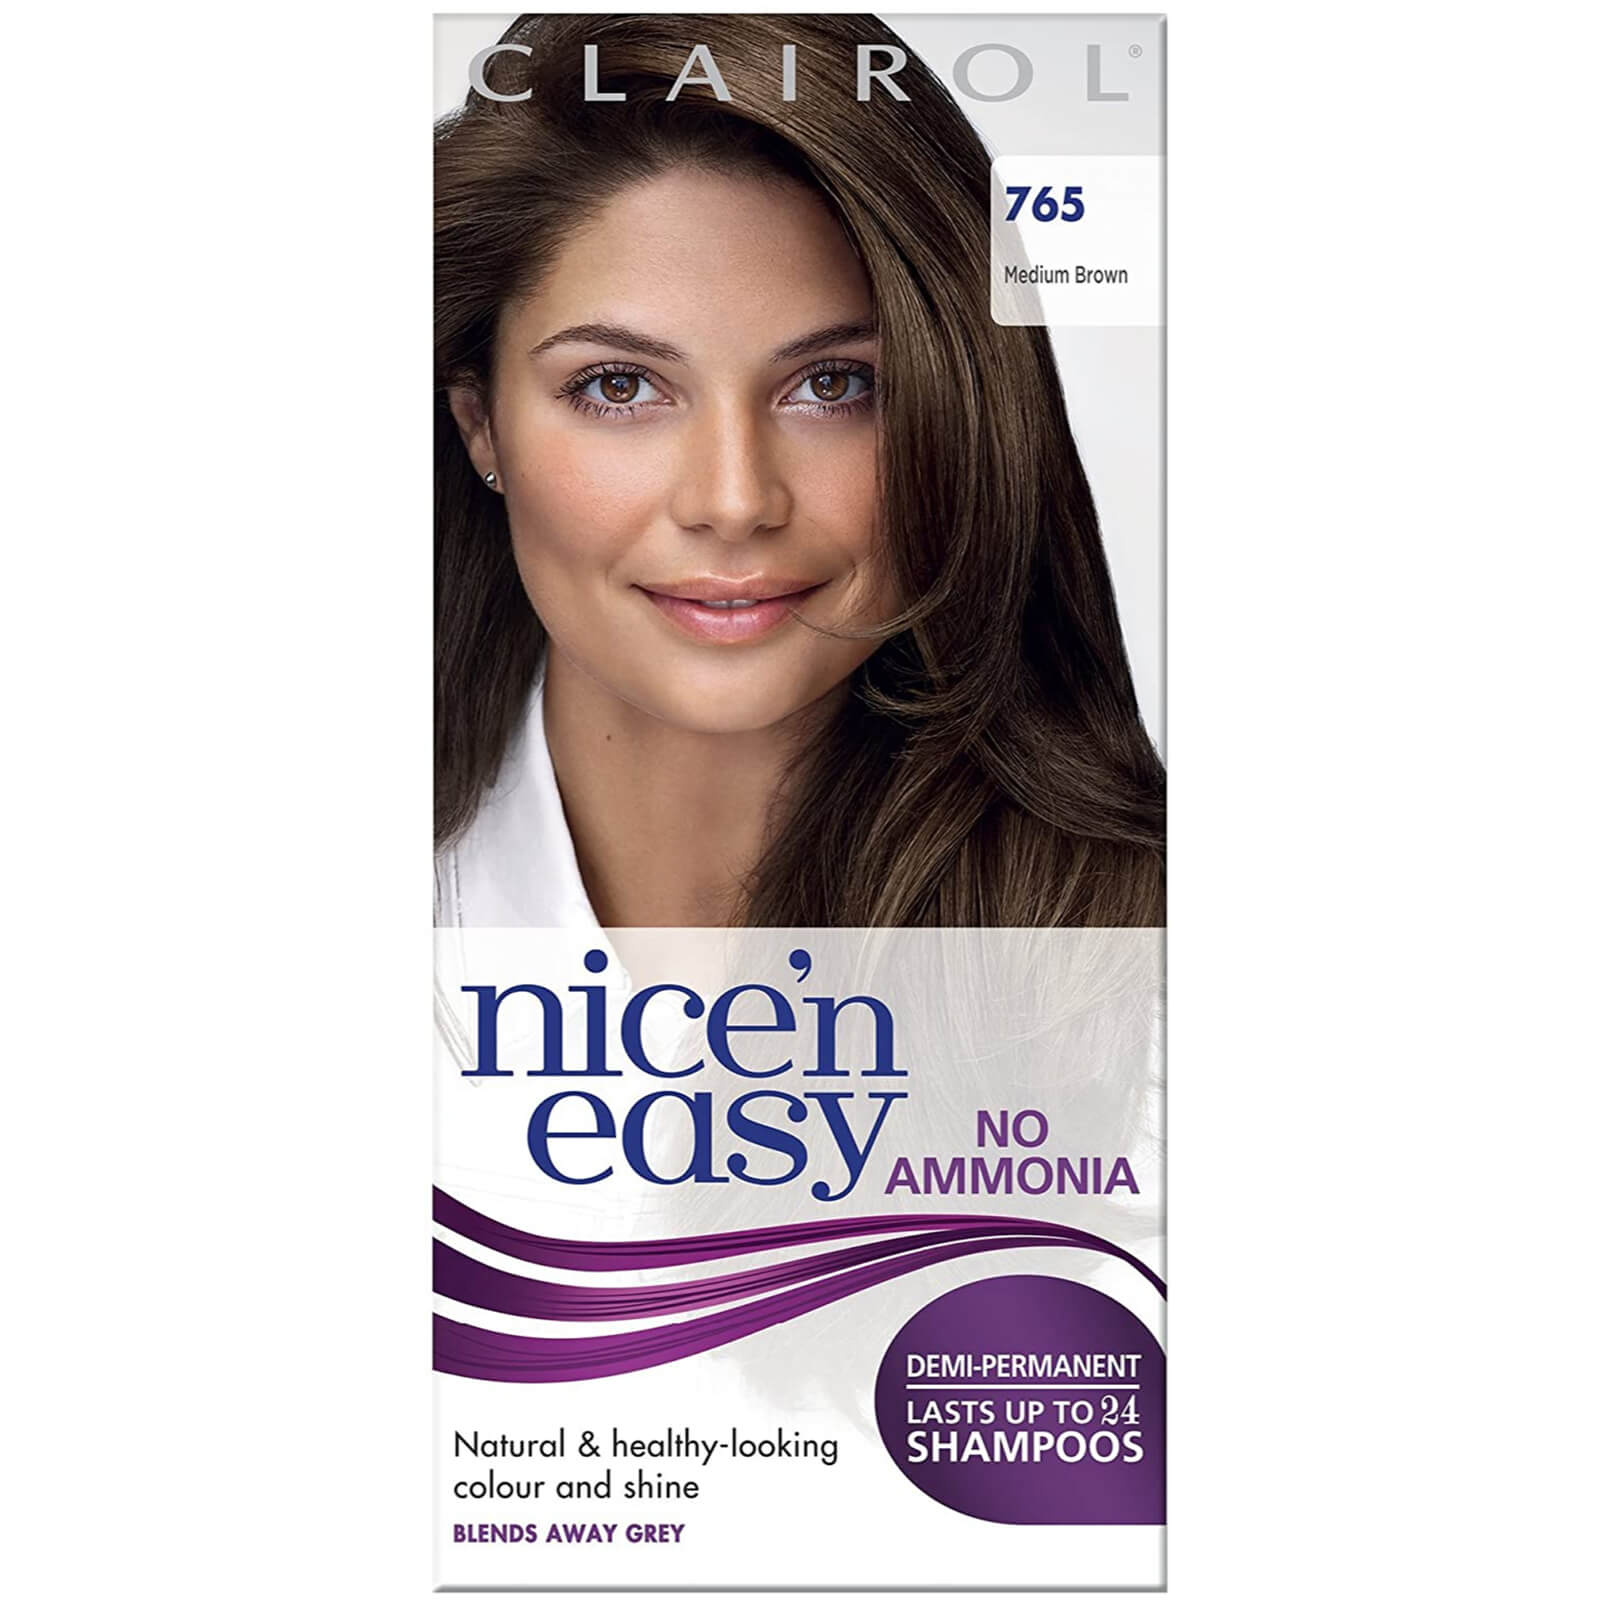 Clairol Nice'n Easy Semi-Permanent Hair Dye with No Ammonia (Various Shades) - 765 Medium Brown